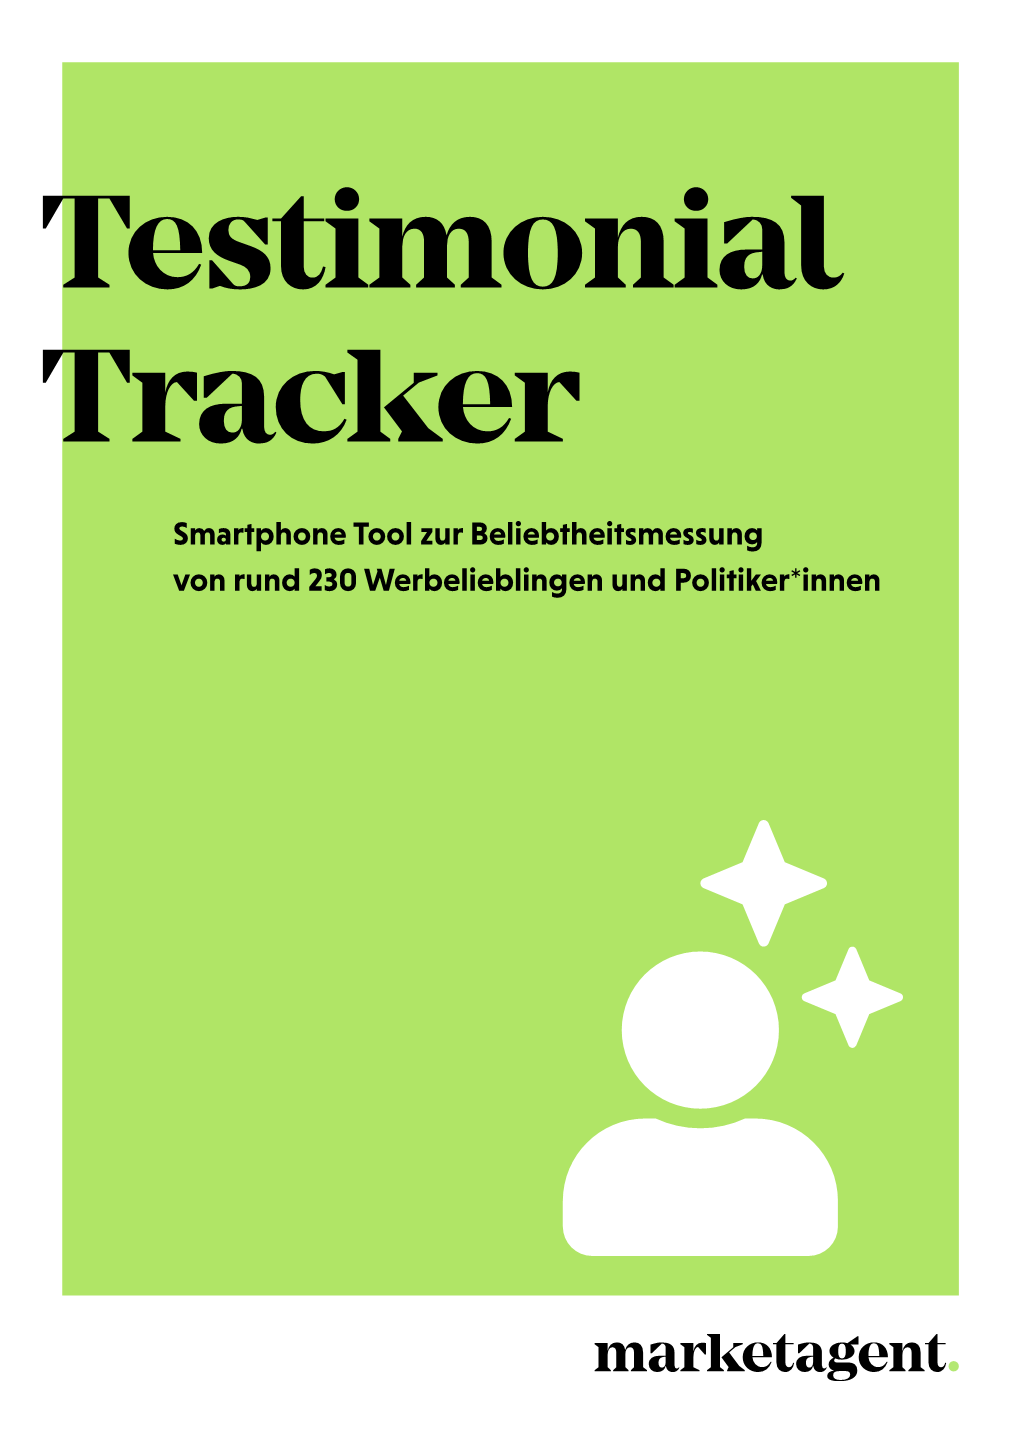 Über Den Testimonial Tracker